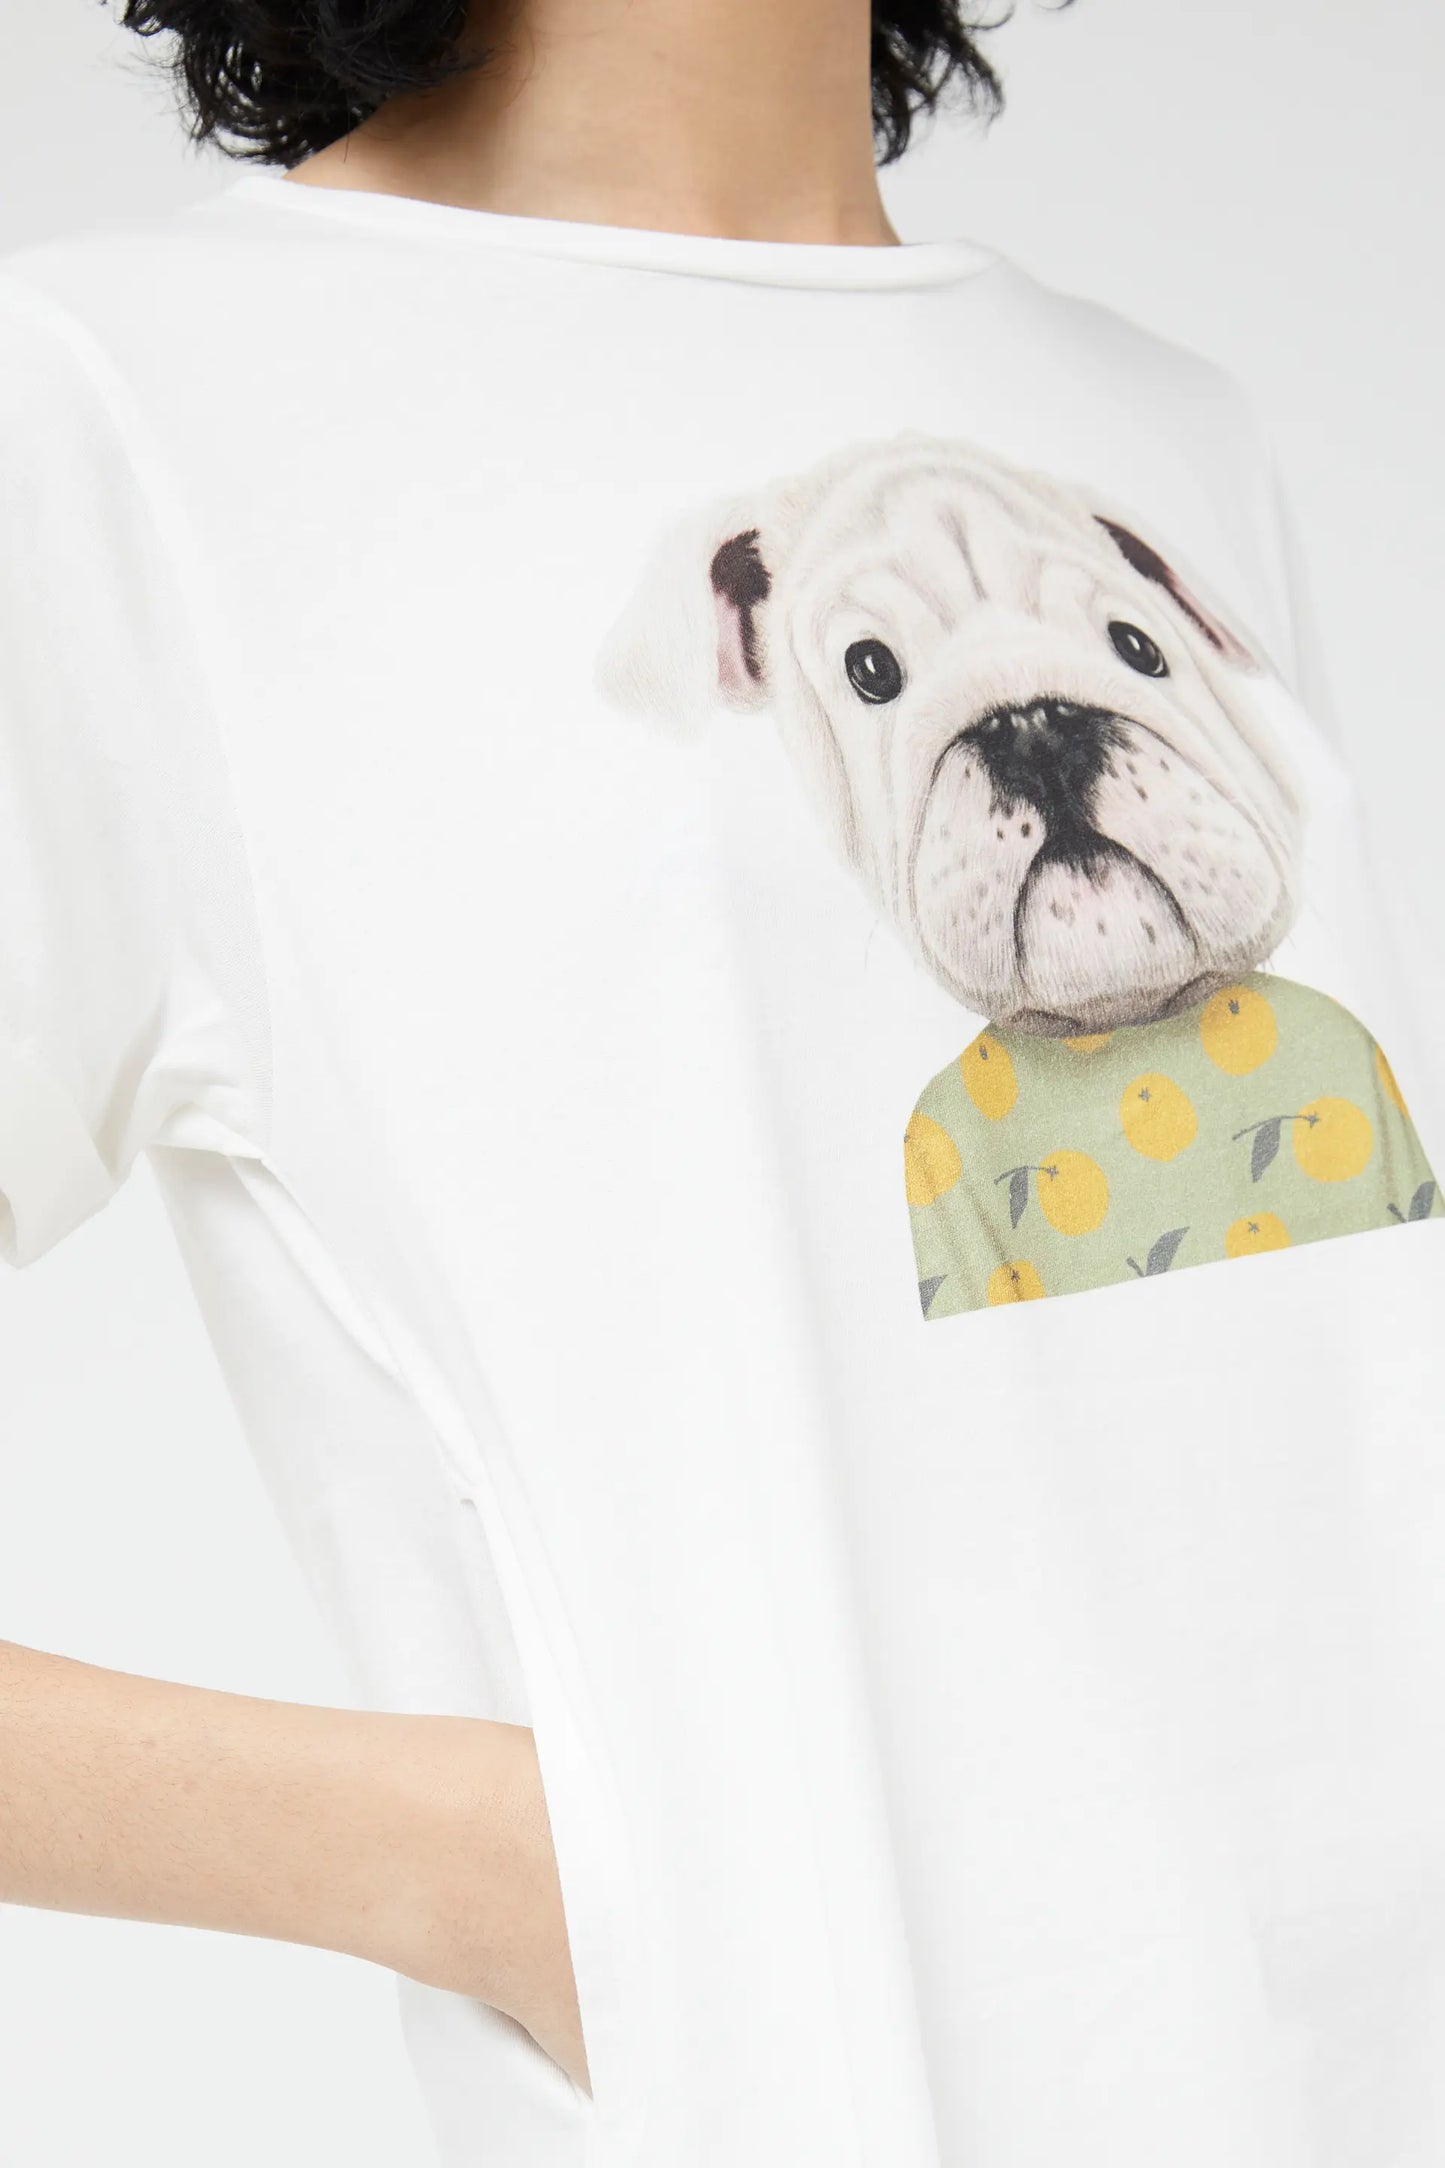 T-shirt bianca con stampa di cani